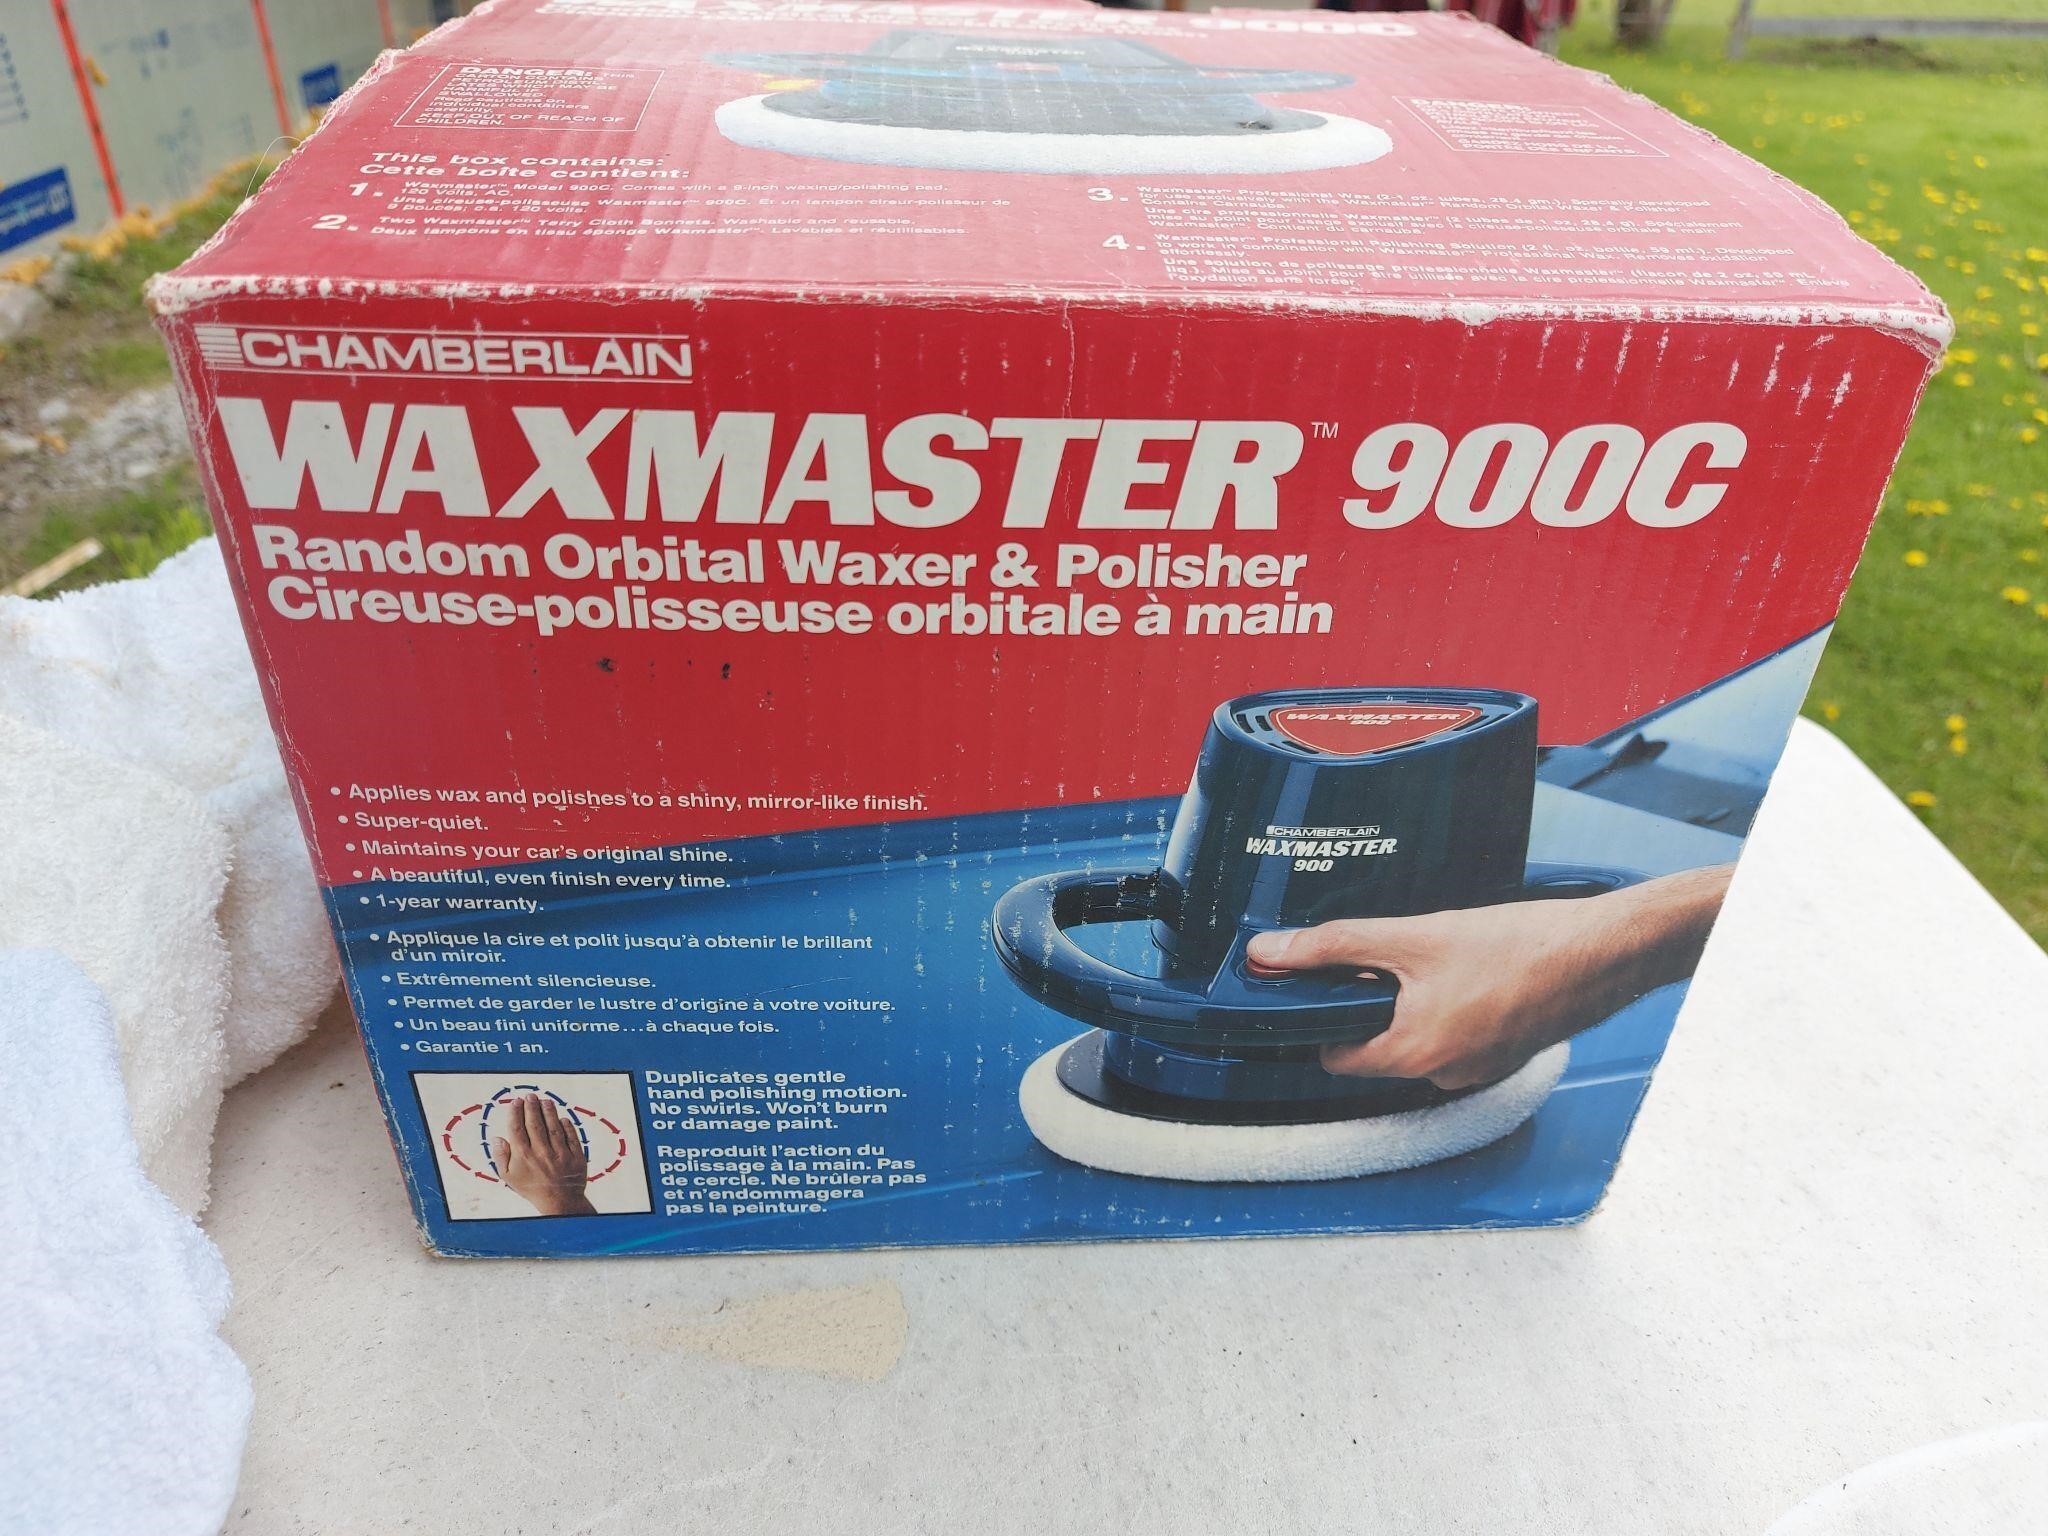 Chamberlain Wax Master 900c Waxer Polisher Works!